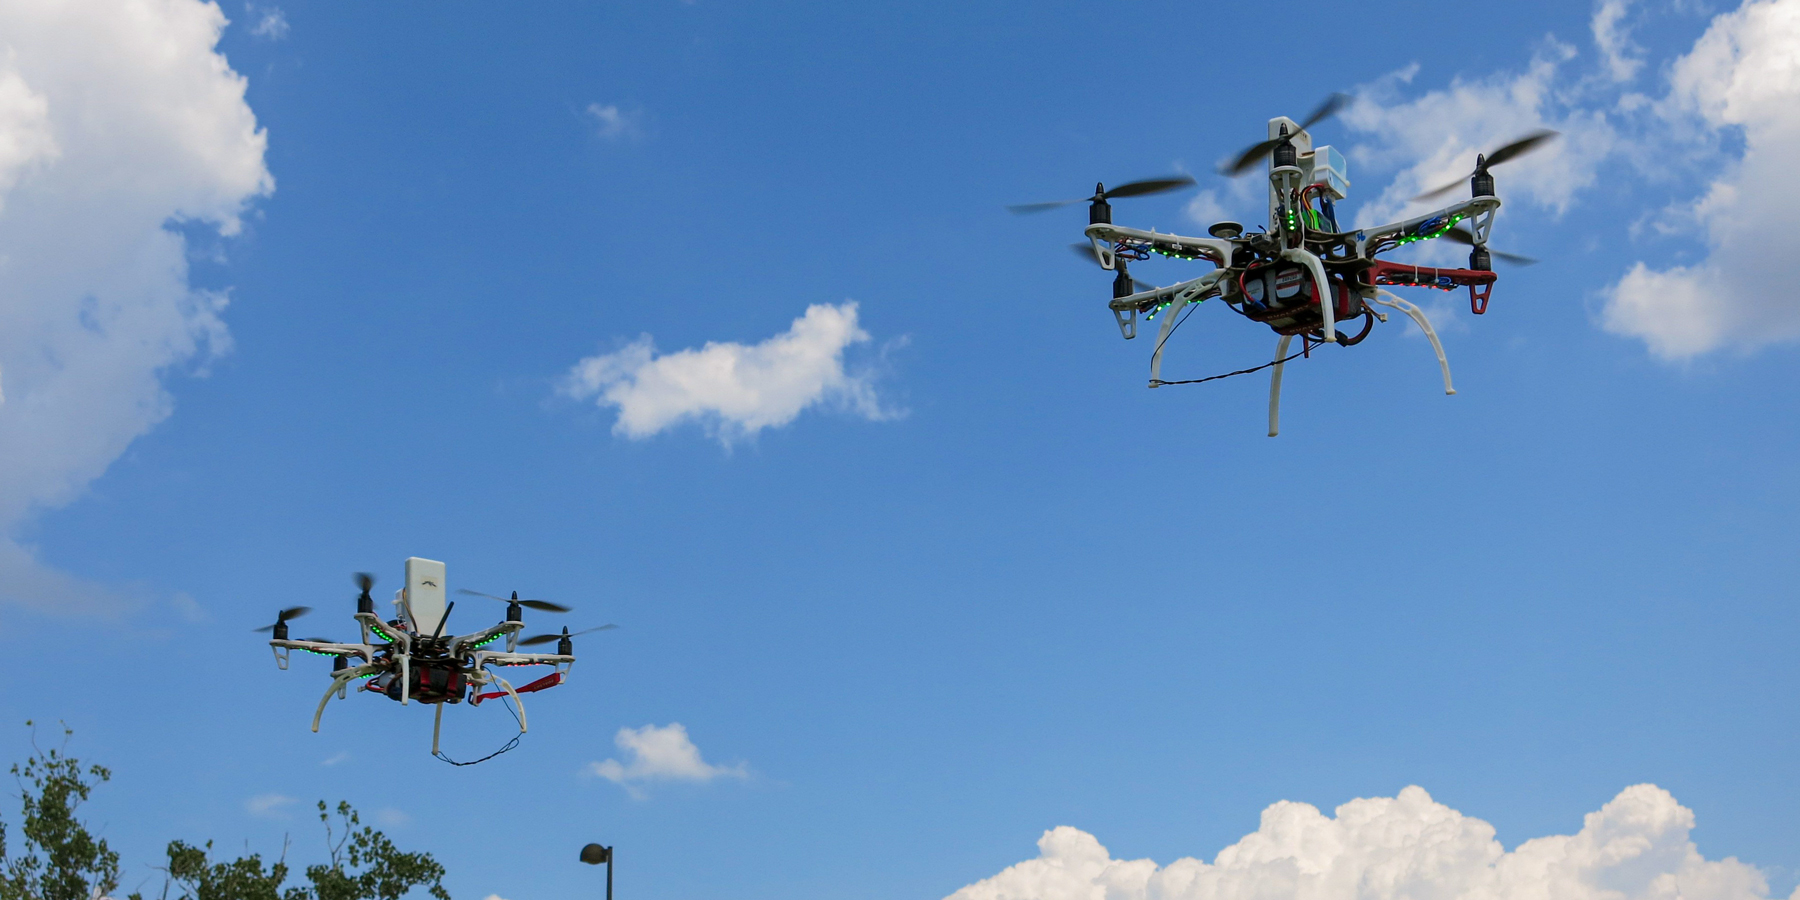 Two drones in flight.